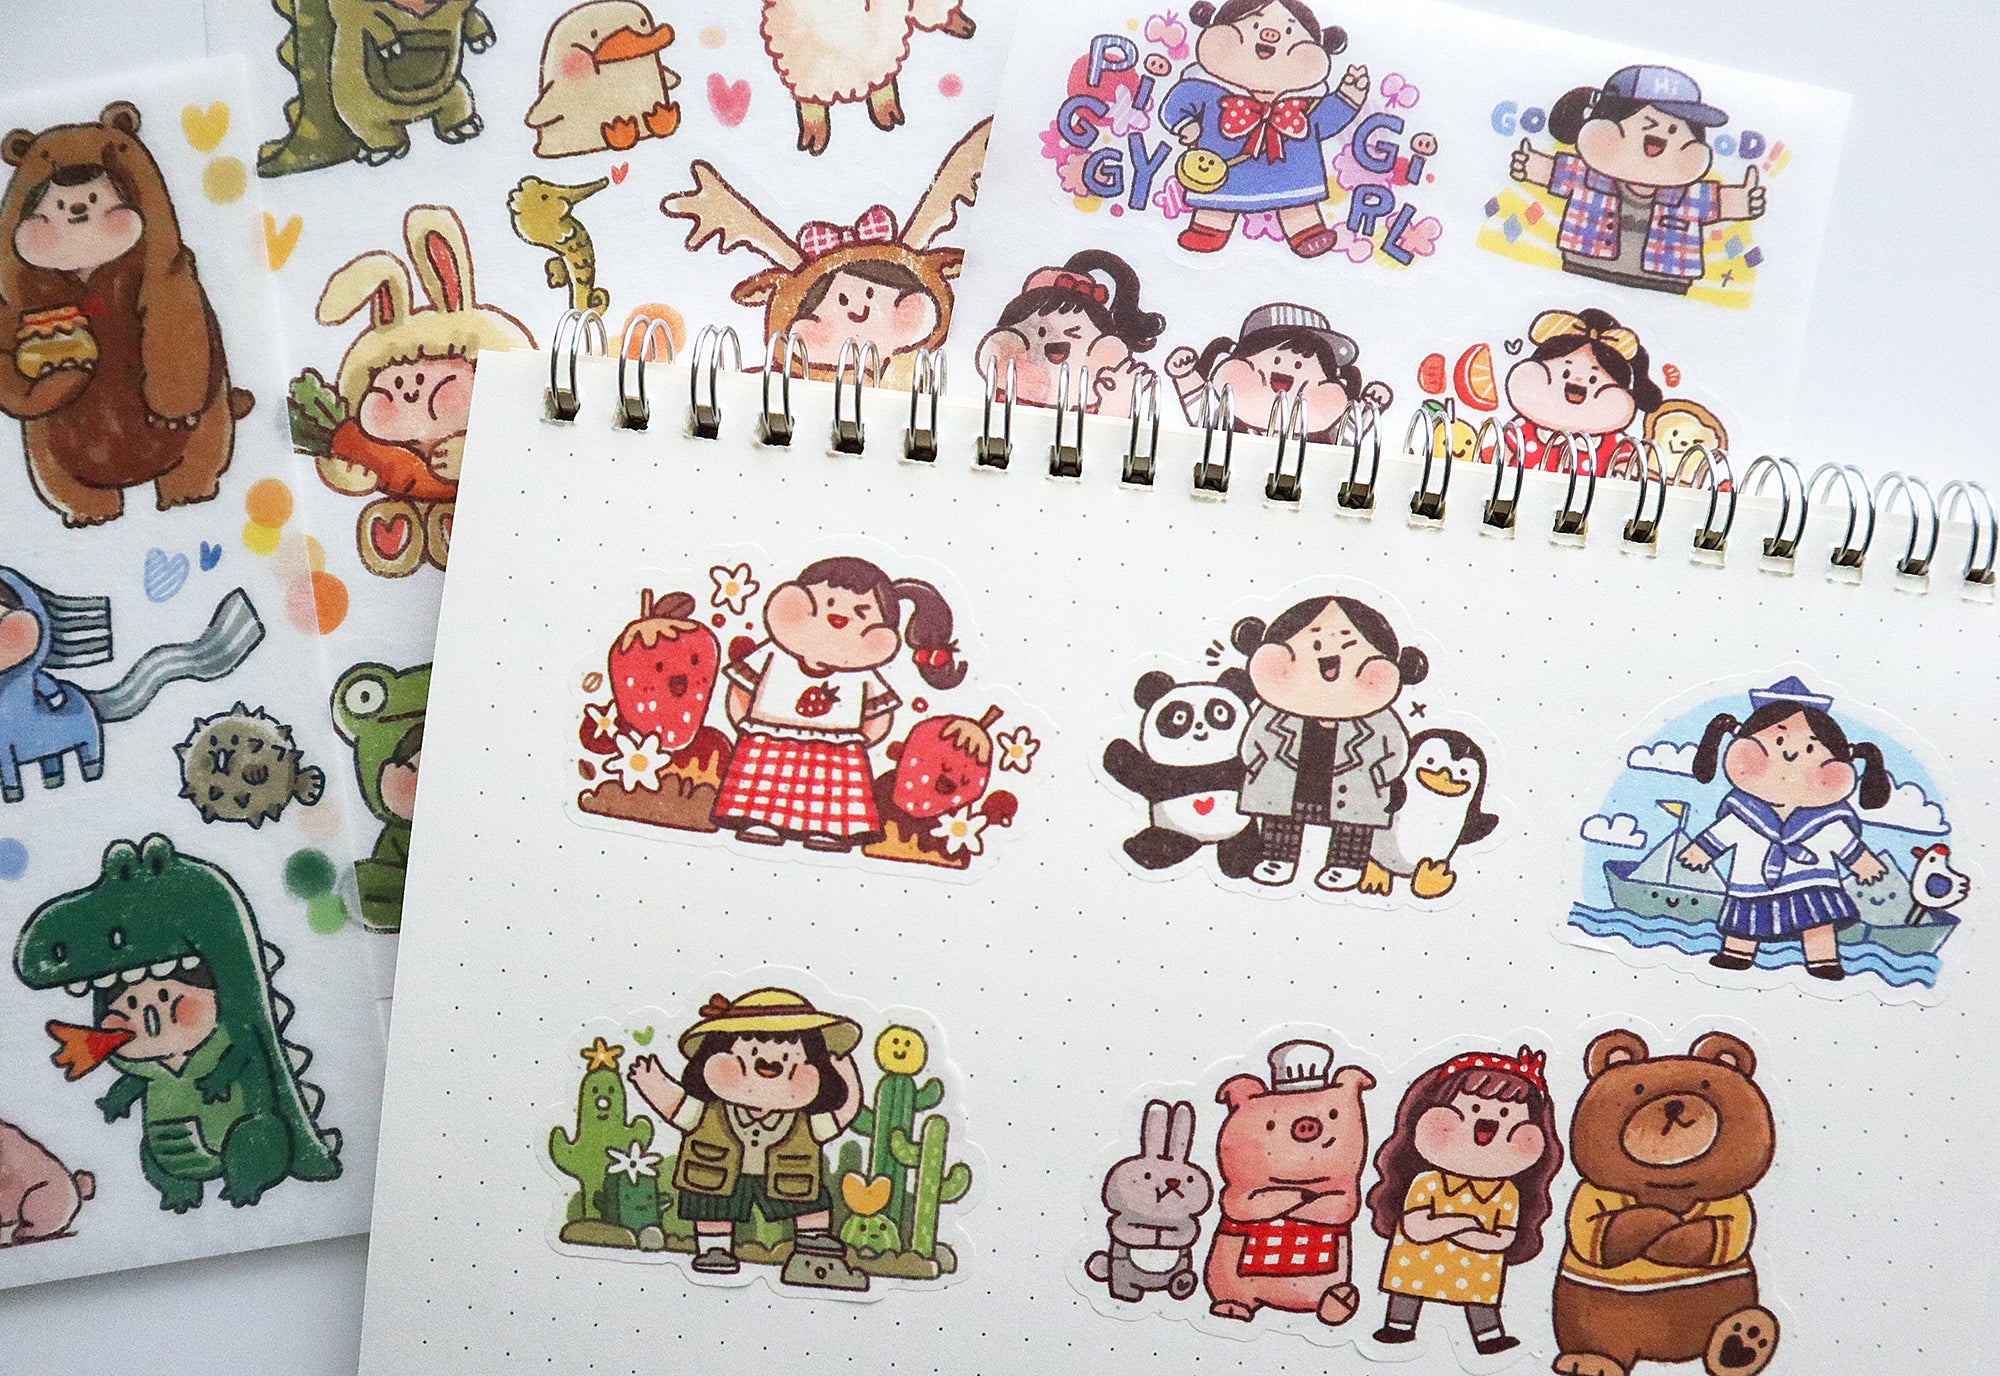 Meatball Stickers Sheet: Animals and Rainbow Girls